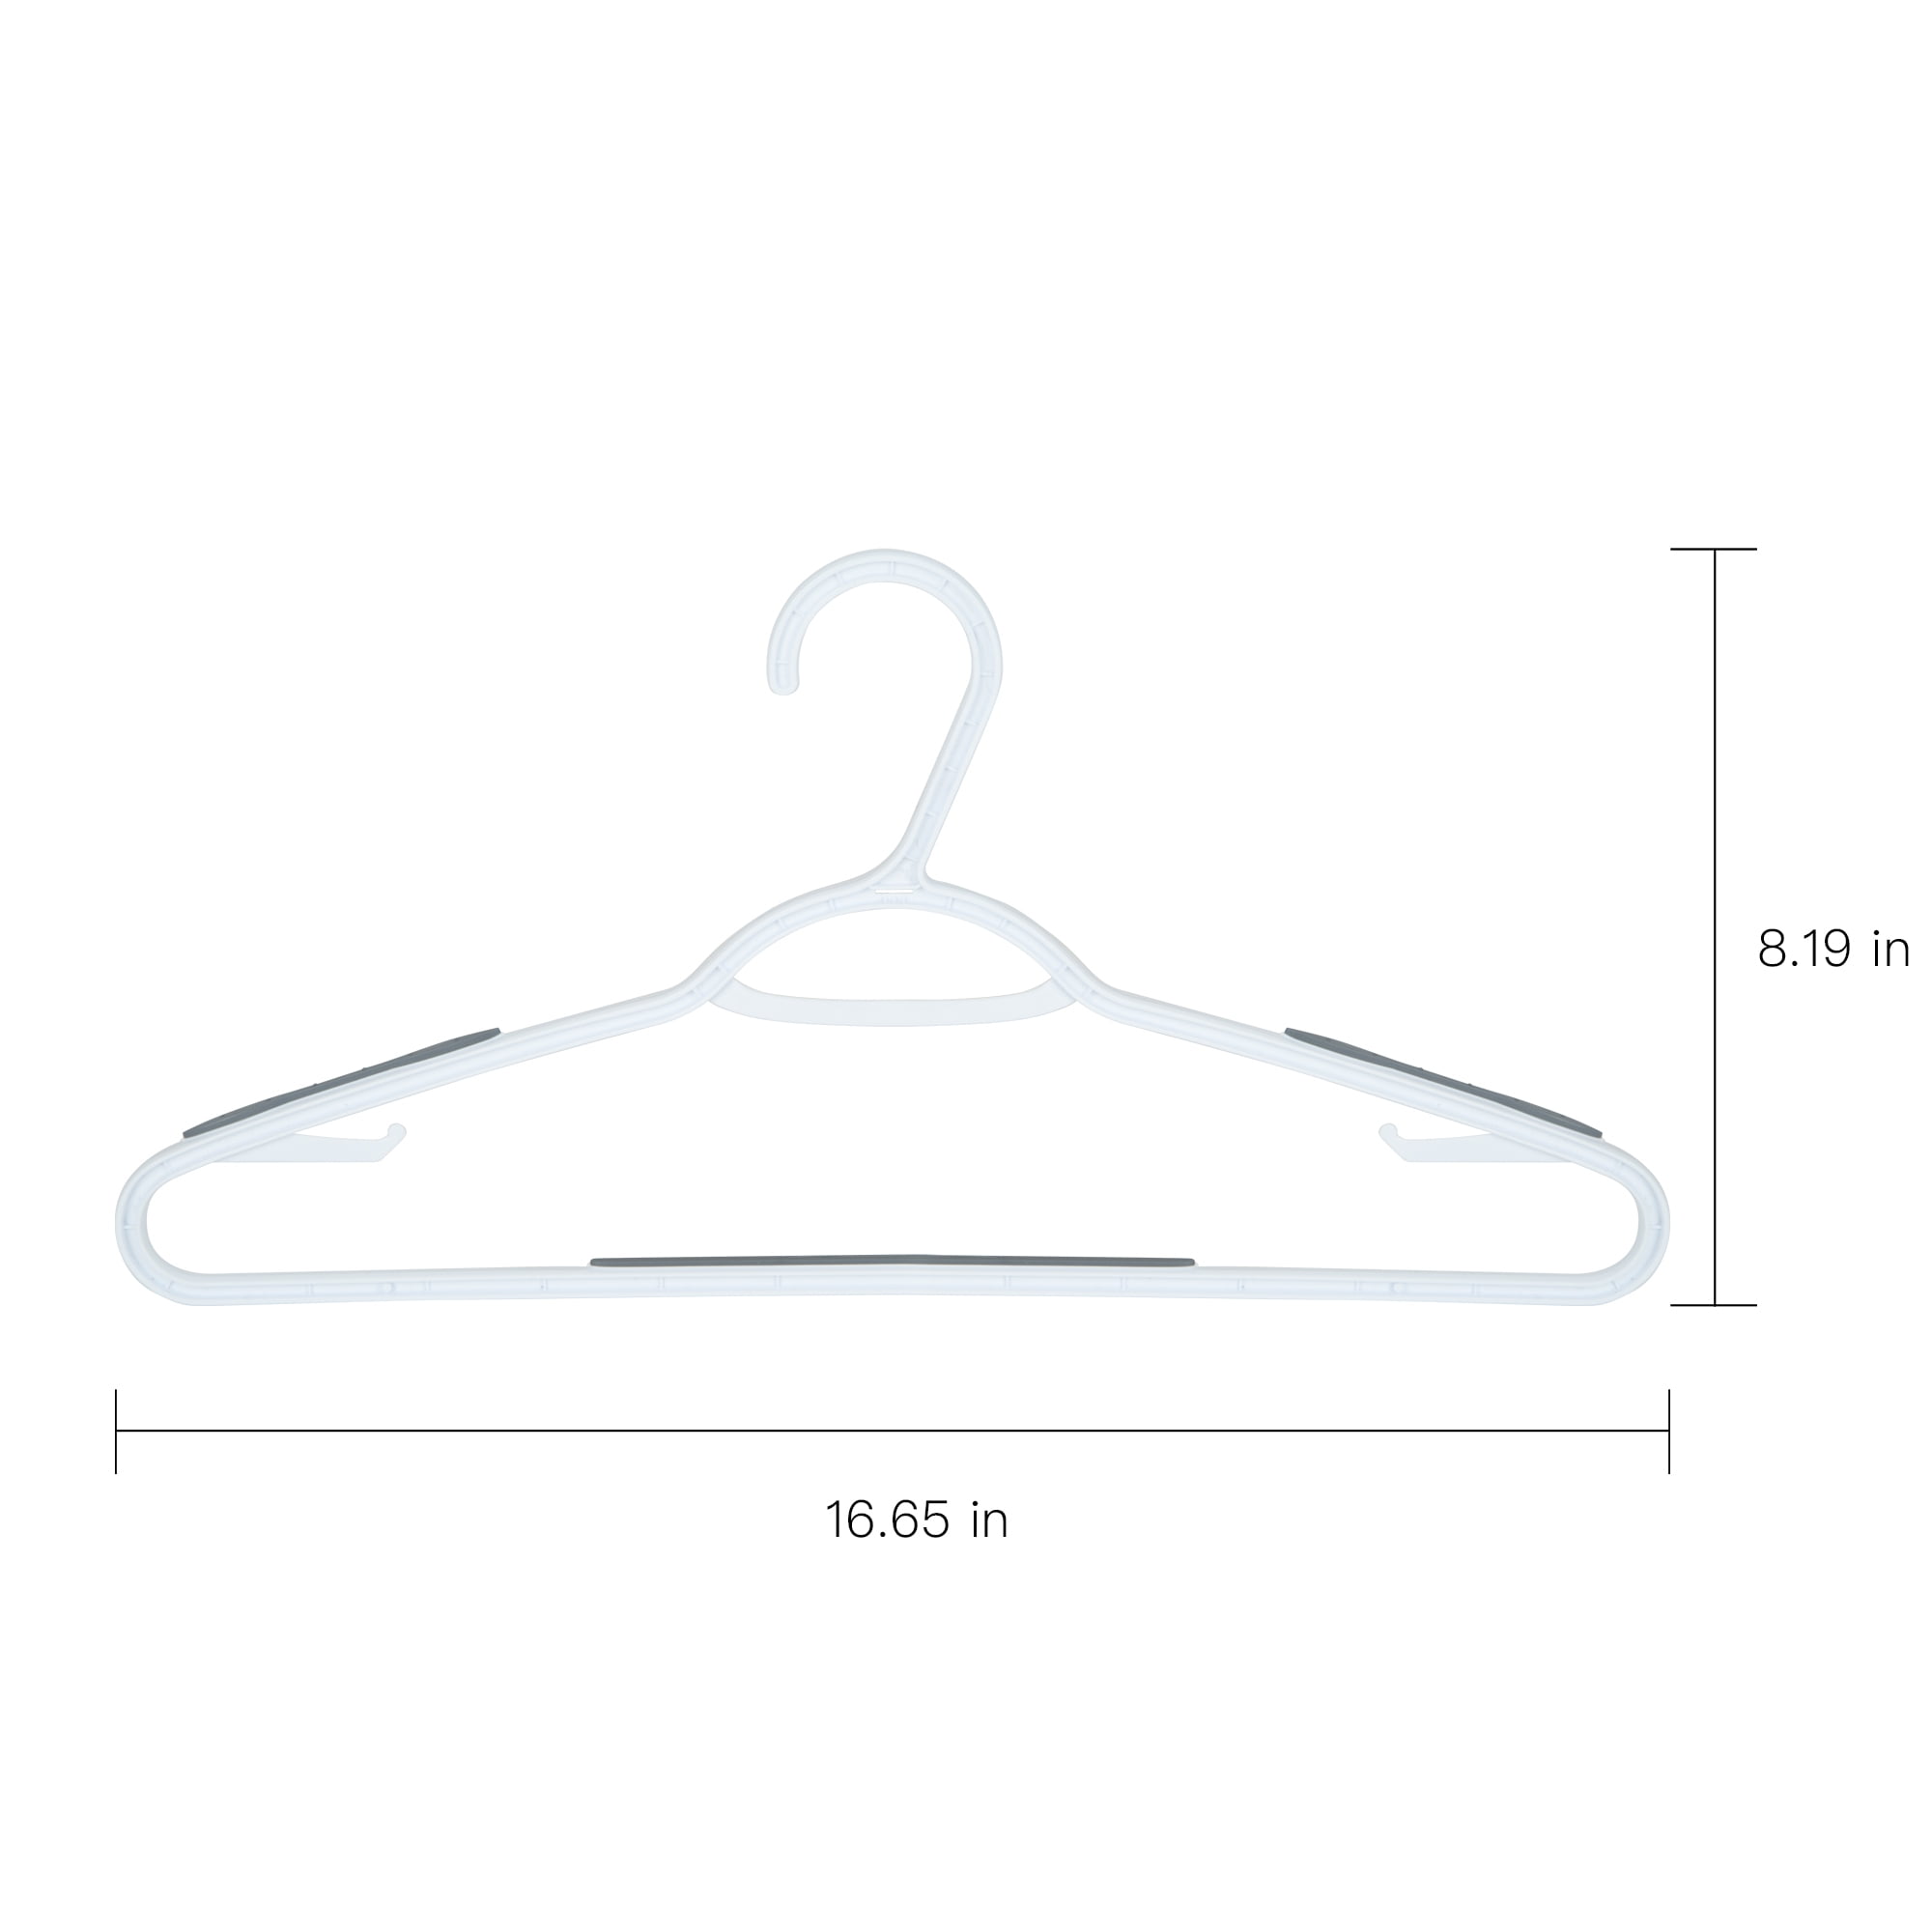 20 Pack Plastic Coat Clothes Hanger Black Strong Reliable Value Hangers Value! 